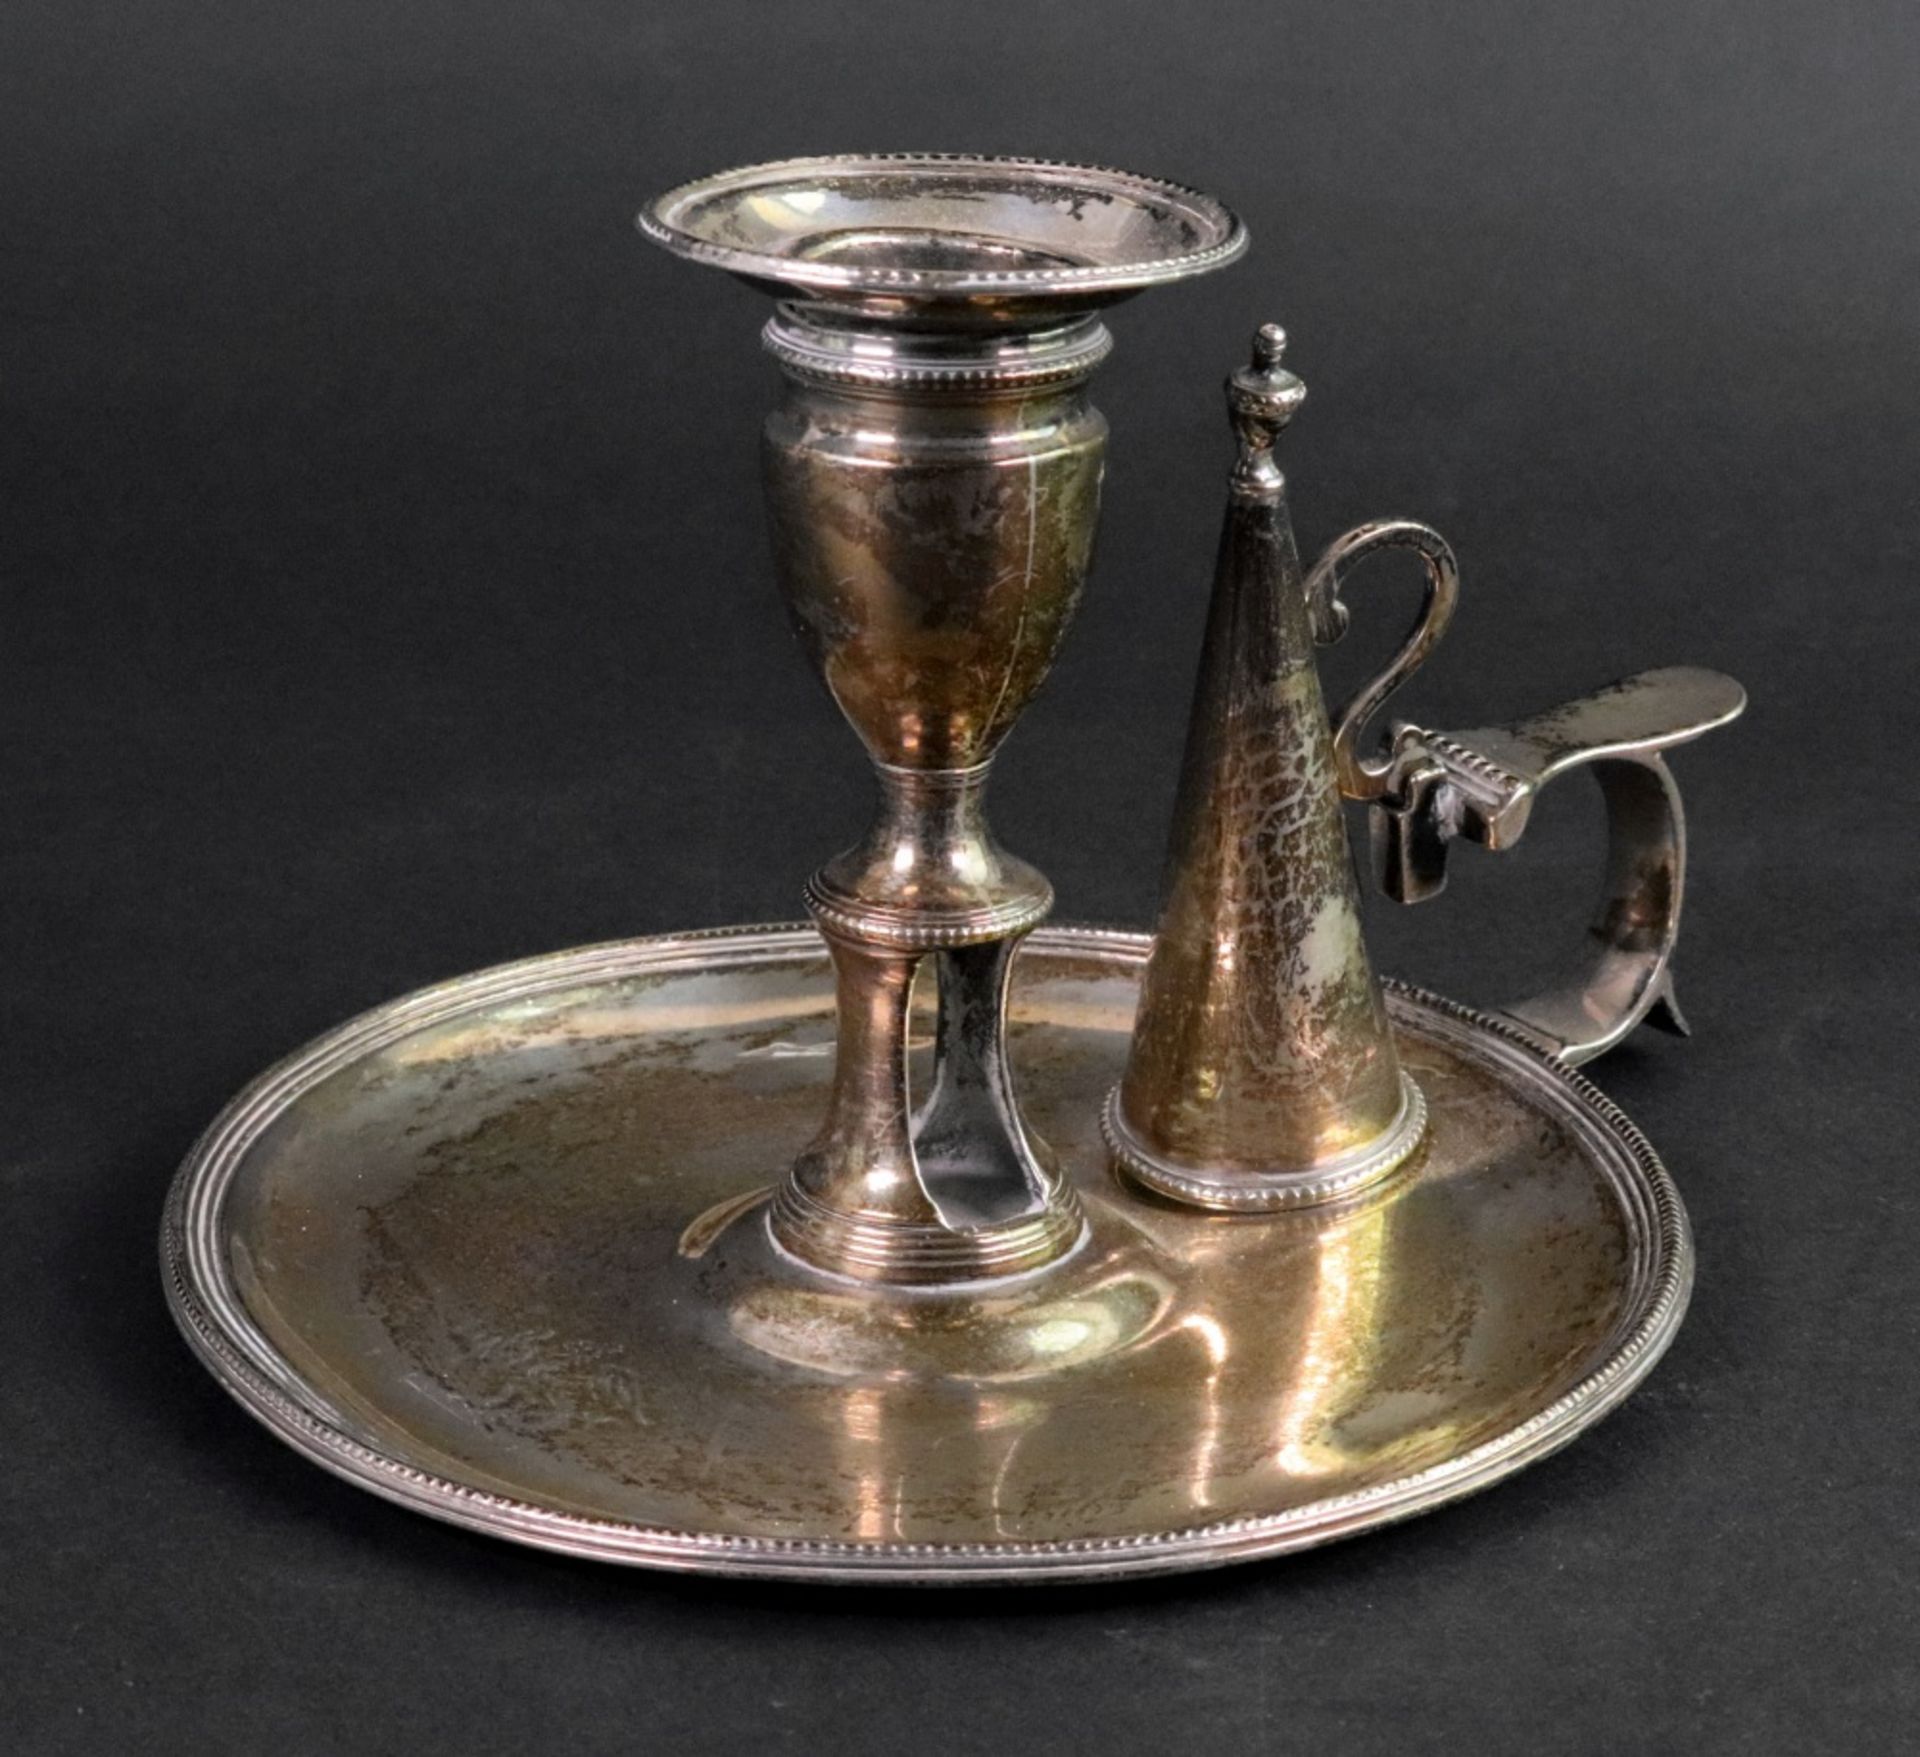 A George III silver chamber candlestick, John Carter, London 1789,